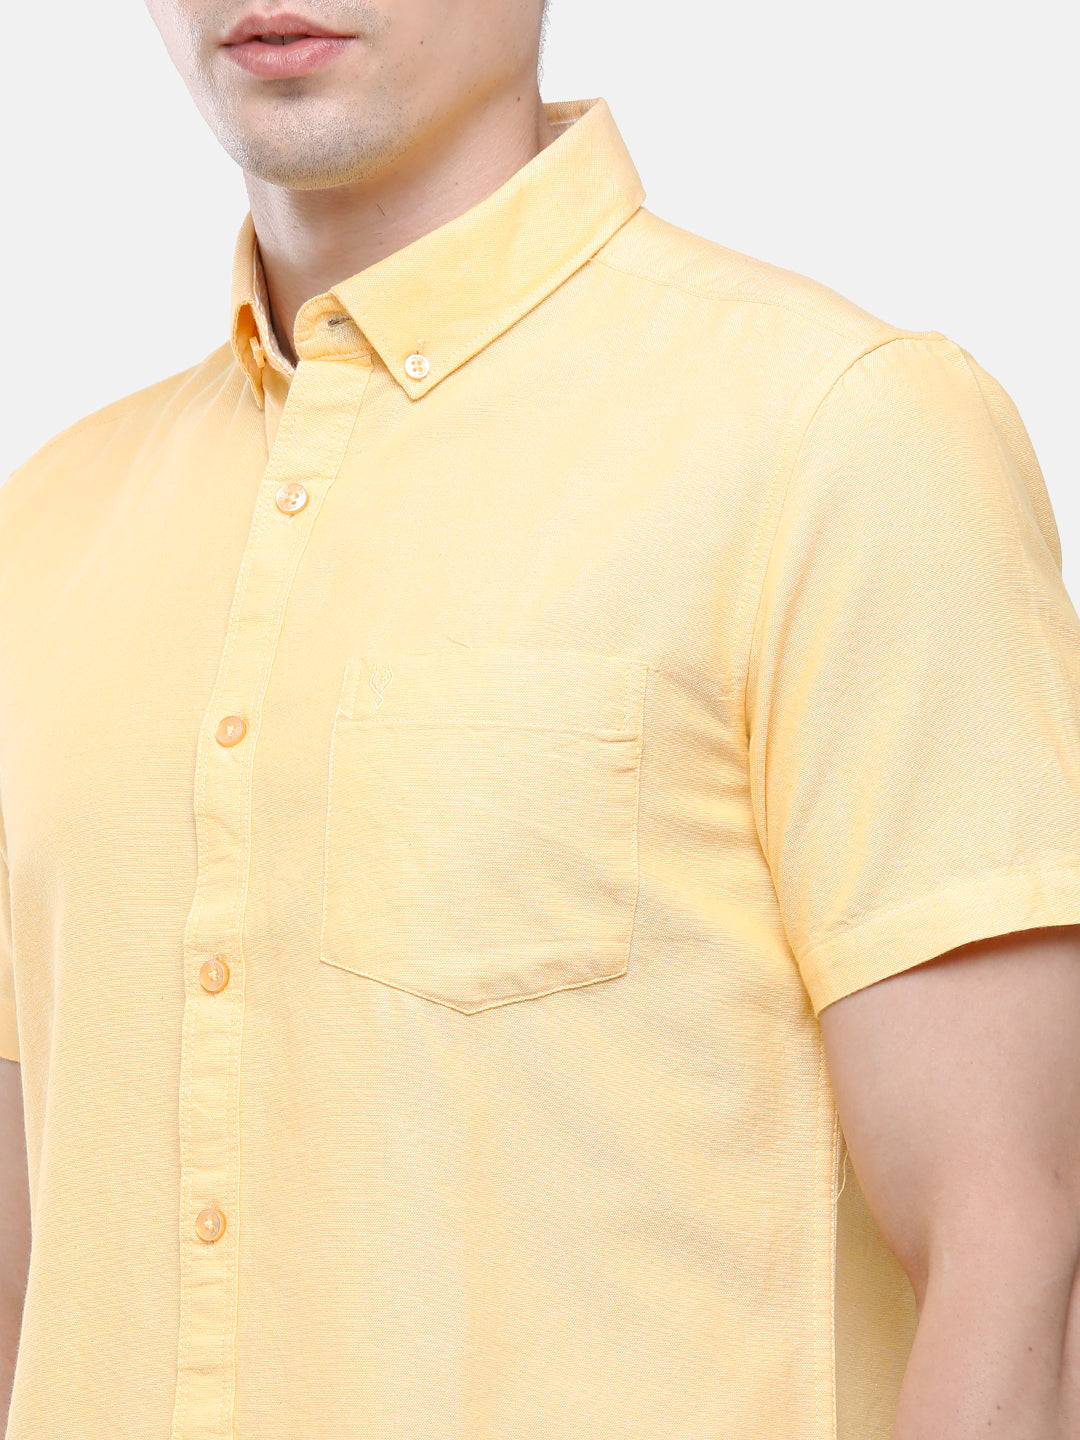 Classic Polo Men's Cotton Yellow Solid Half Sleeve Shirt - Enzo-Yellow-Mf-Hs